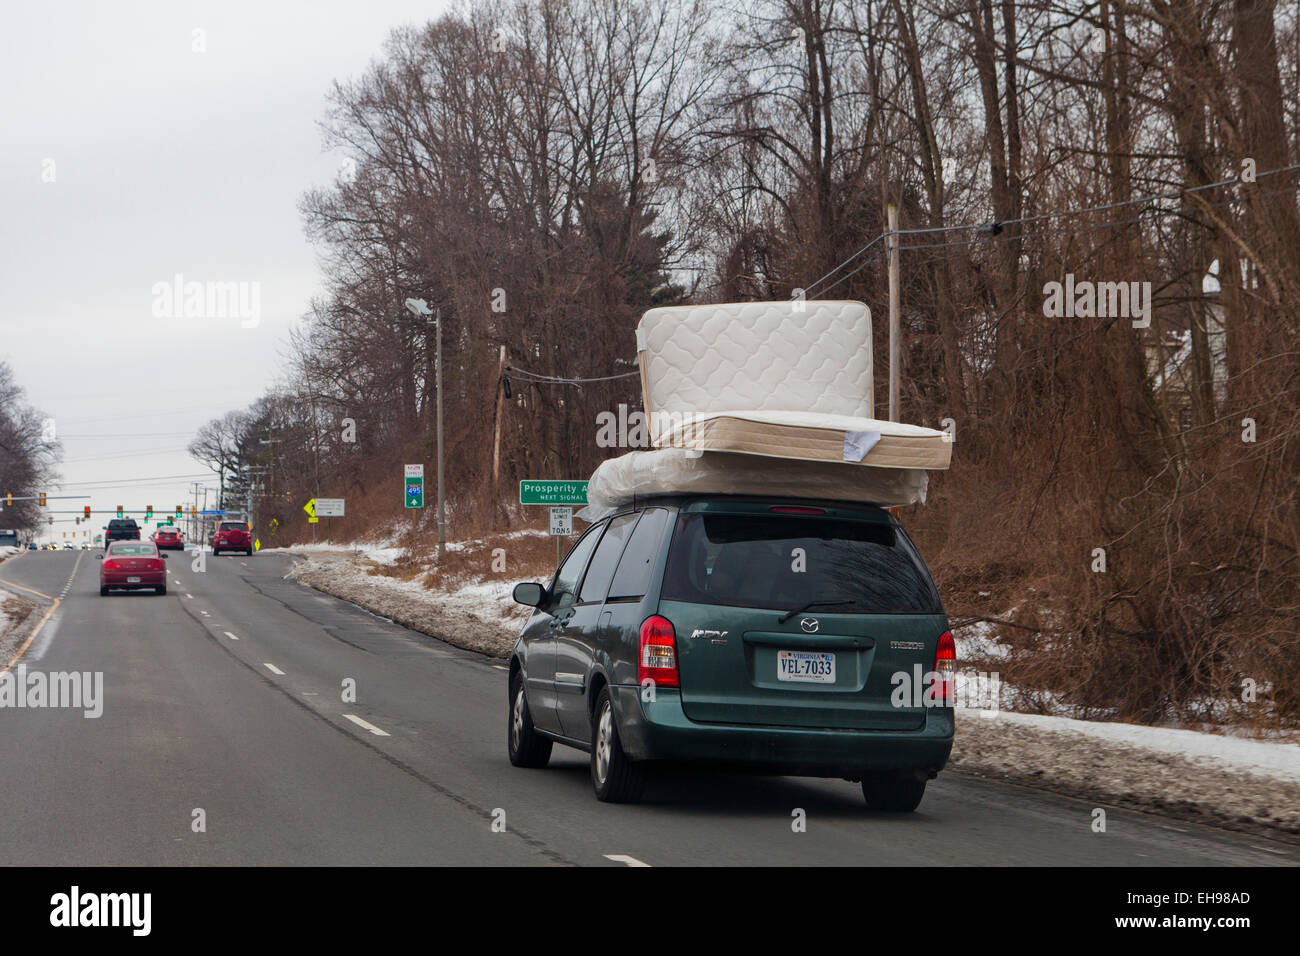 Bed mattresses on top of minivan - USA Stock Photo